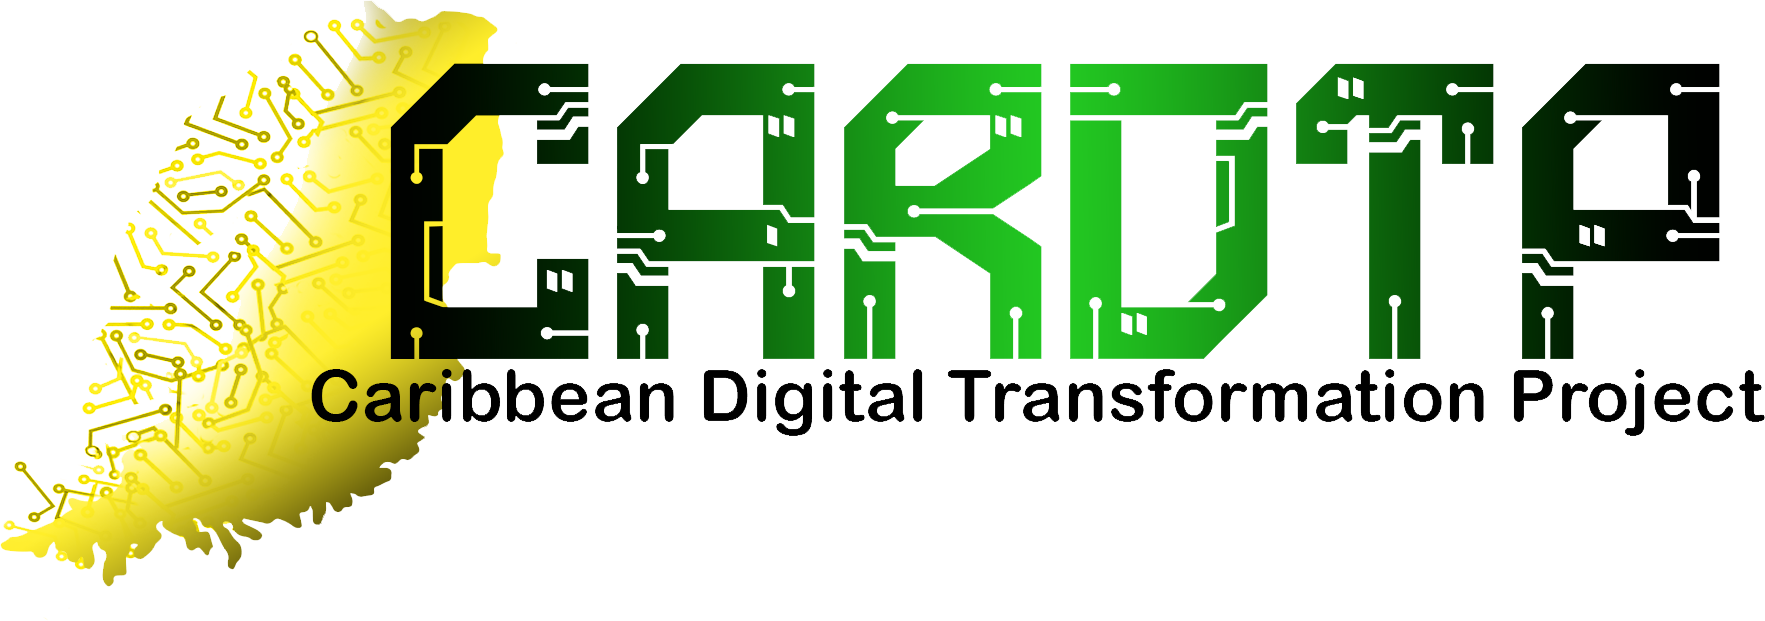 Caribbean Digital Transformation Project (CARDTP)